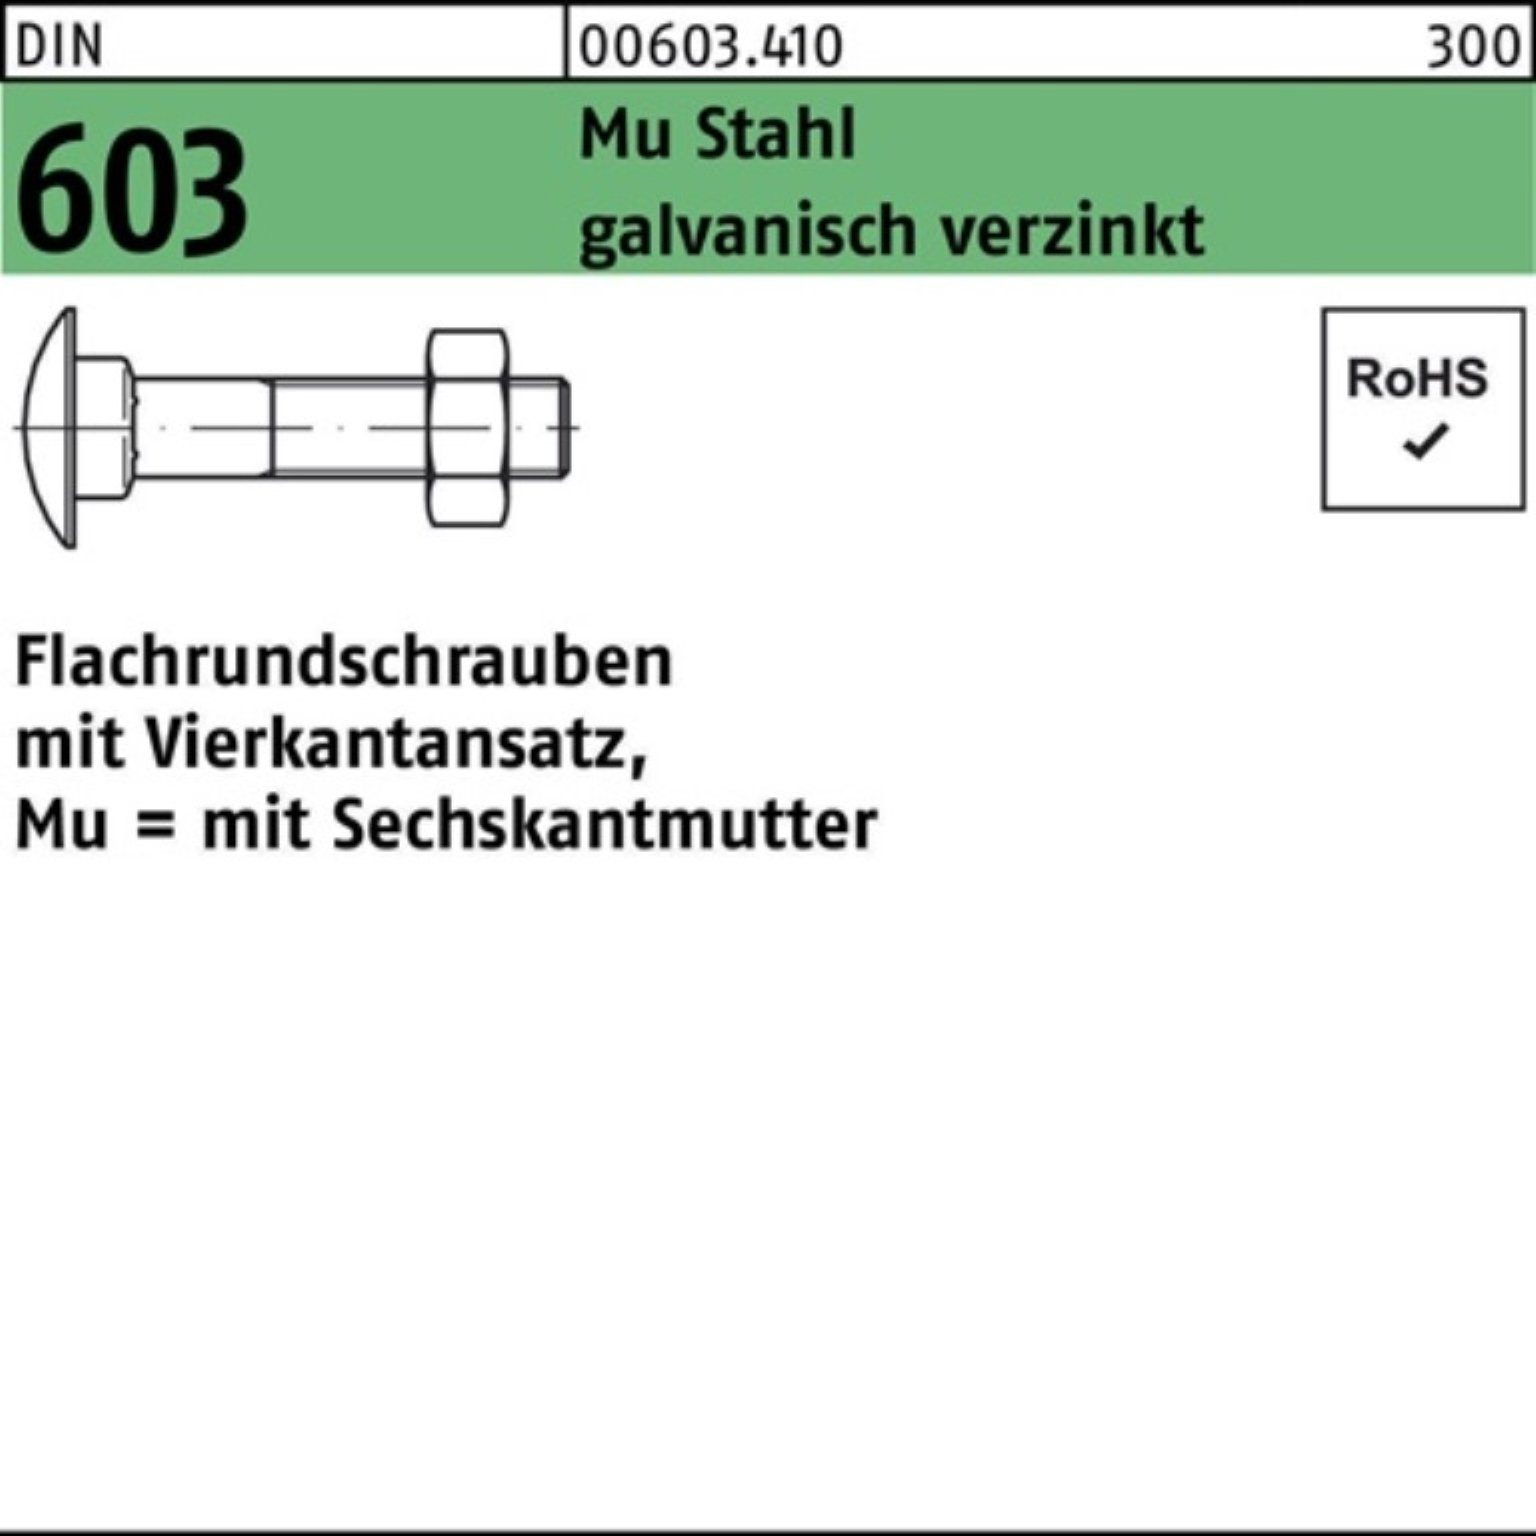 603 Flachrundschraube Vierkantansatz/6-ktmutter Reyher Pack 100er Schraube DIN M16x50